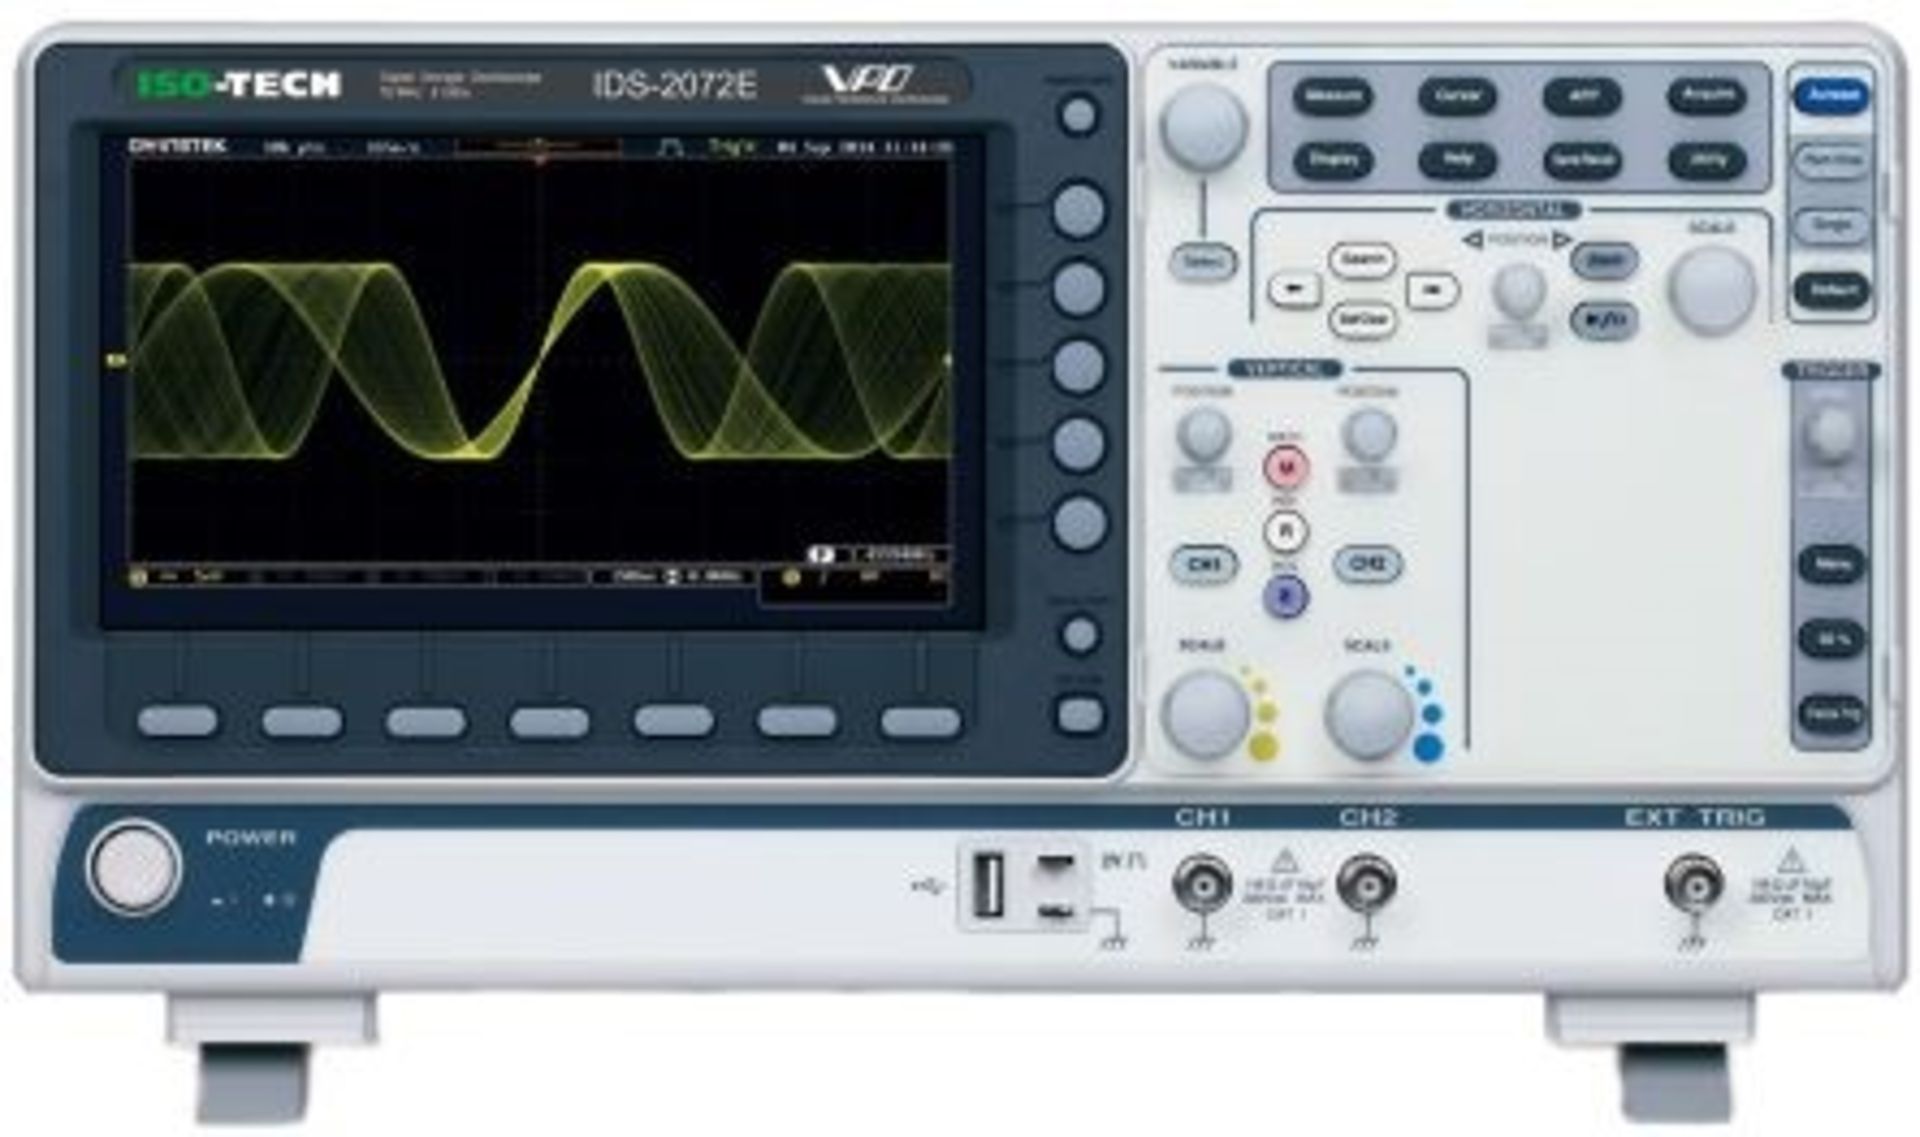 ISO-TECH IDS-200+G1714:G30690E Series IDS-2072E Digital Oscilloscope